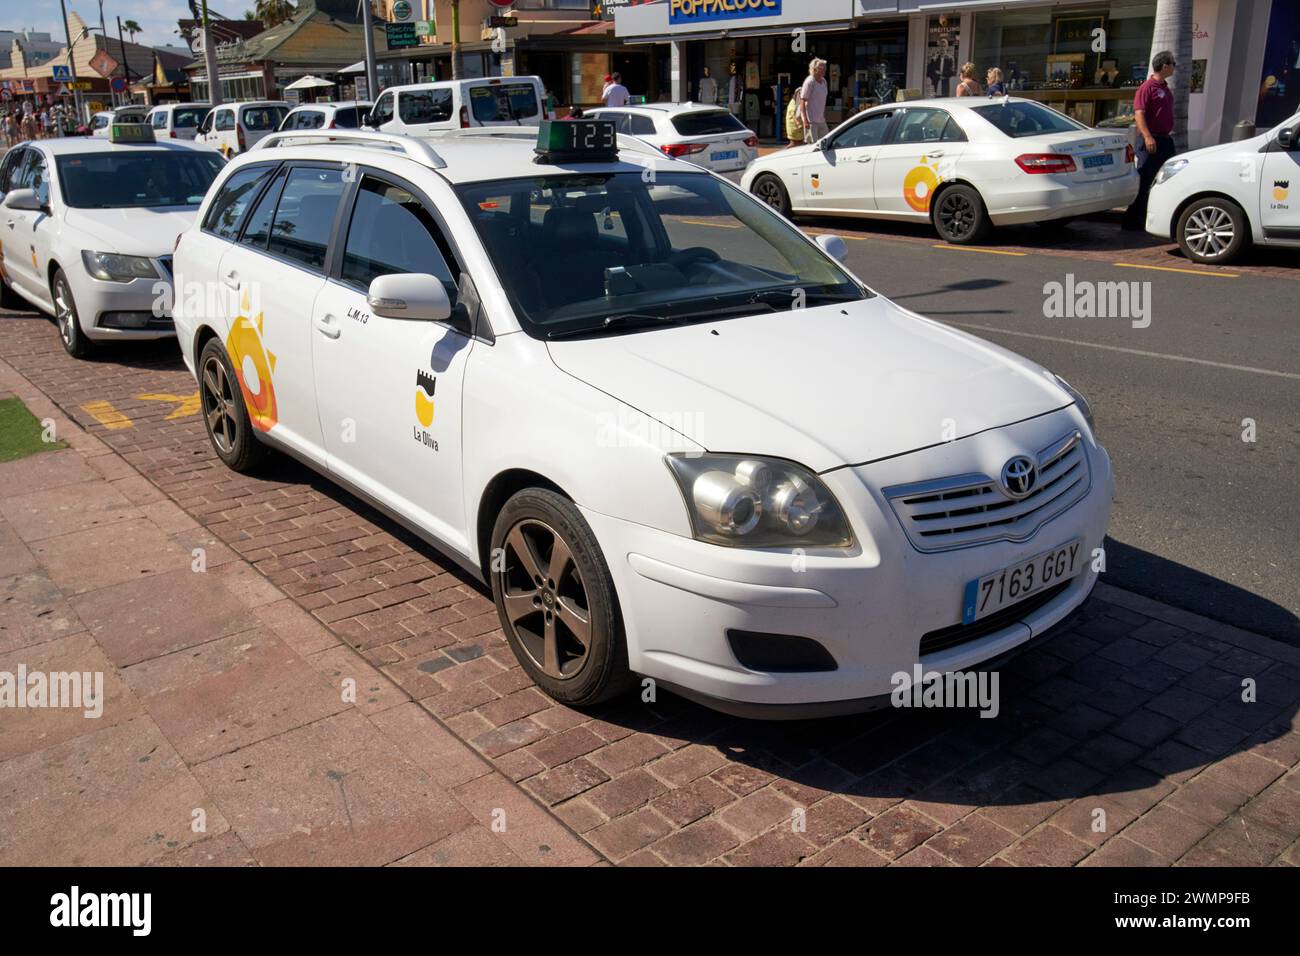 la olivia taxi on taxi rank in downtown Corralejo, fuerteventura, Canary Islands, spain Stock Photo